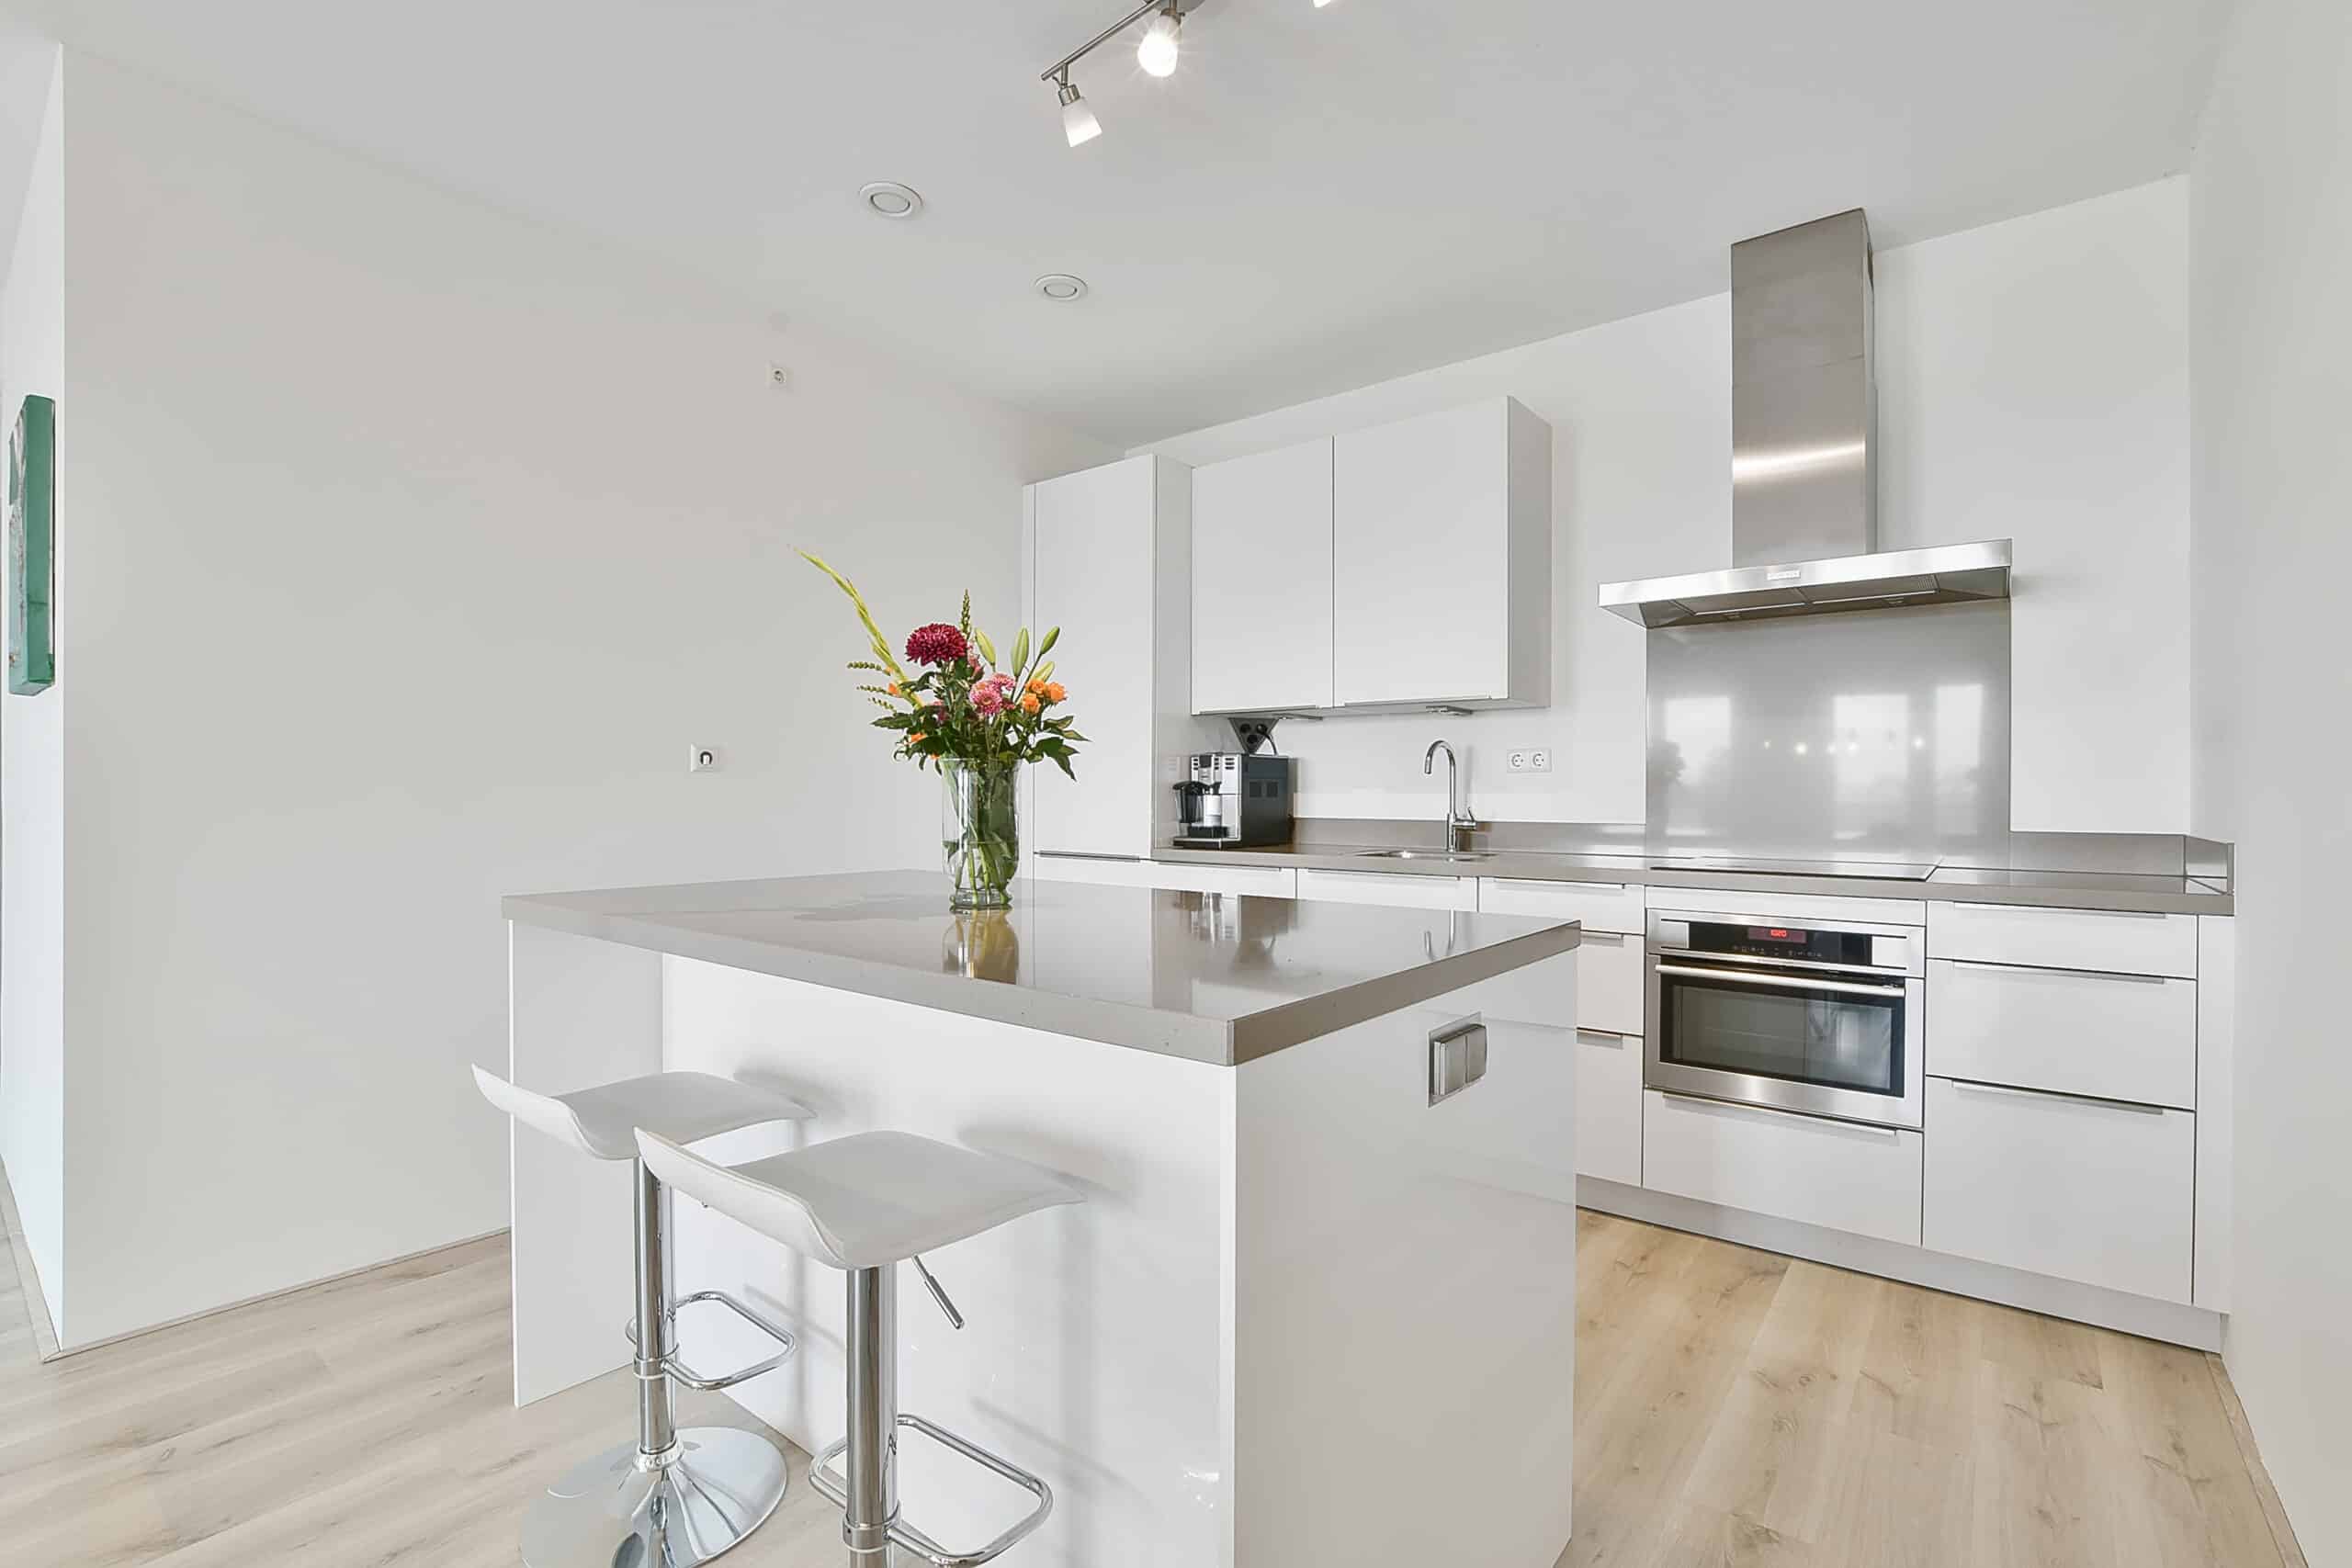 A bright kitchen in an elegant house white kitchen island